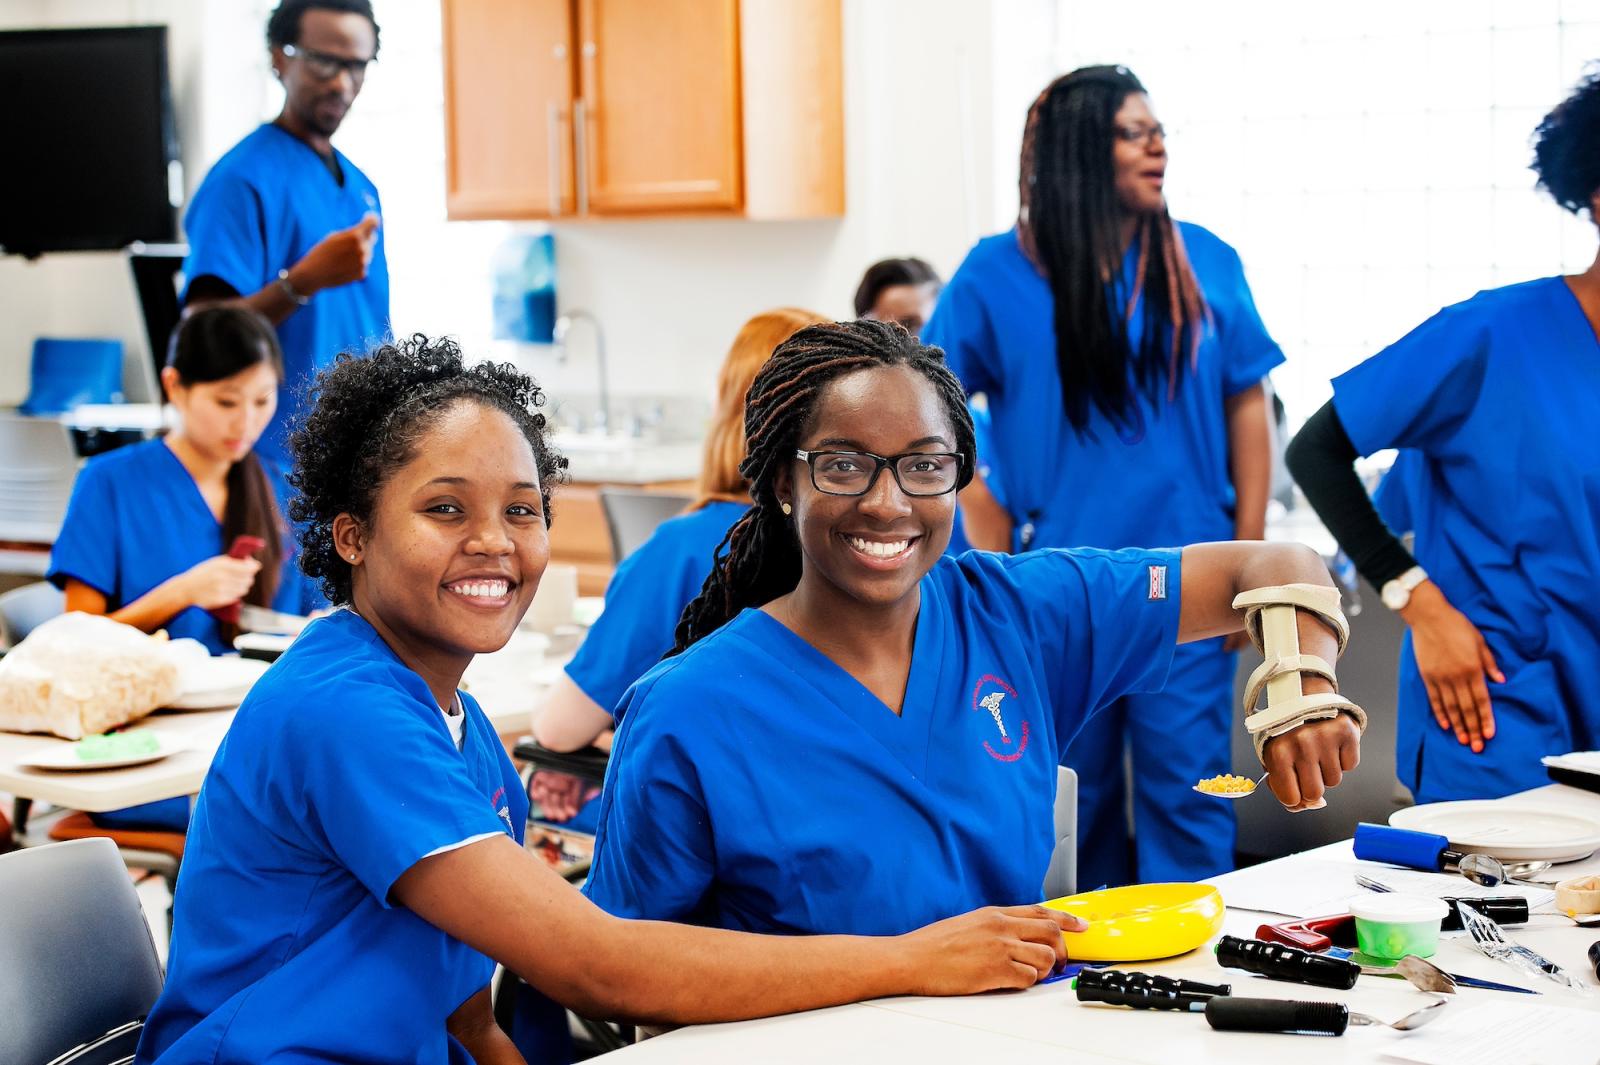 Nursing students in blue uniforms